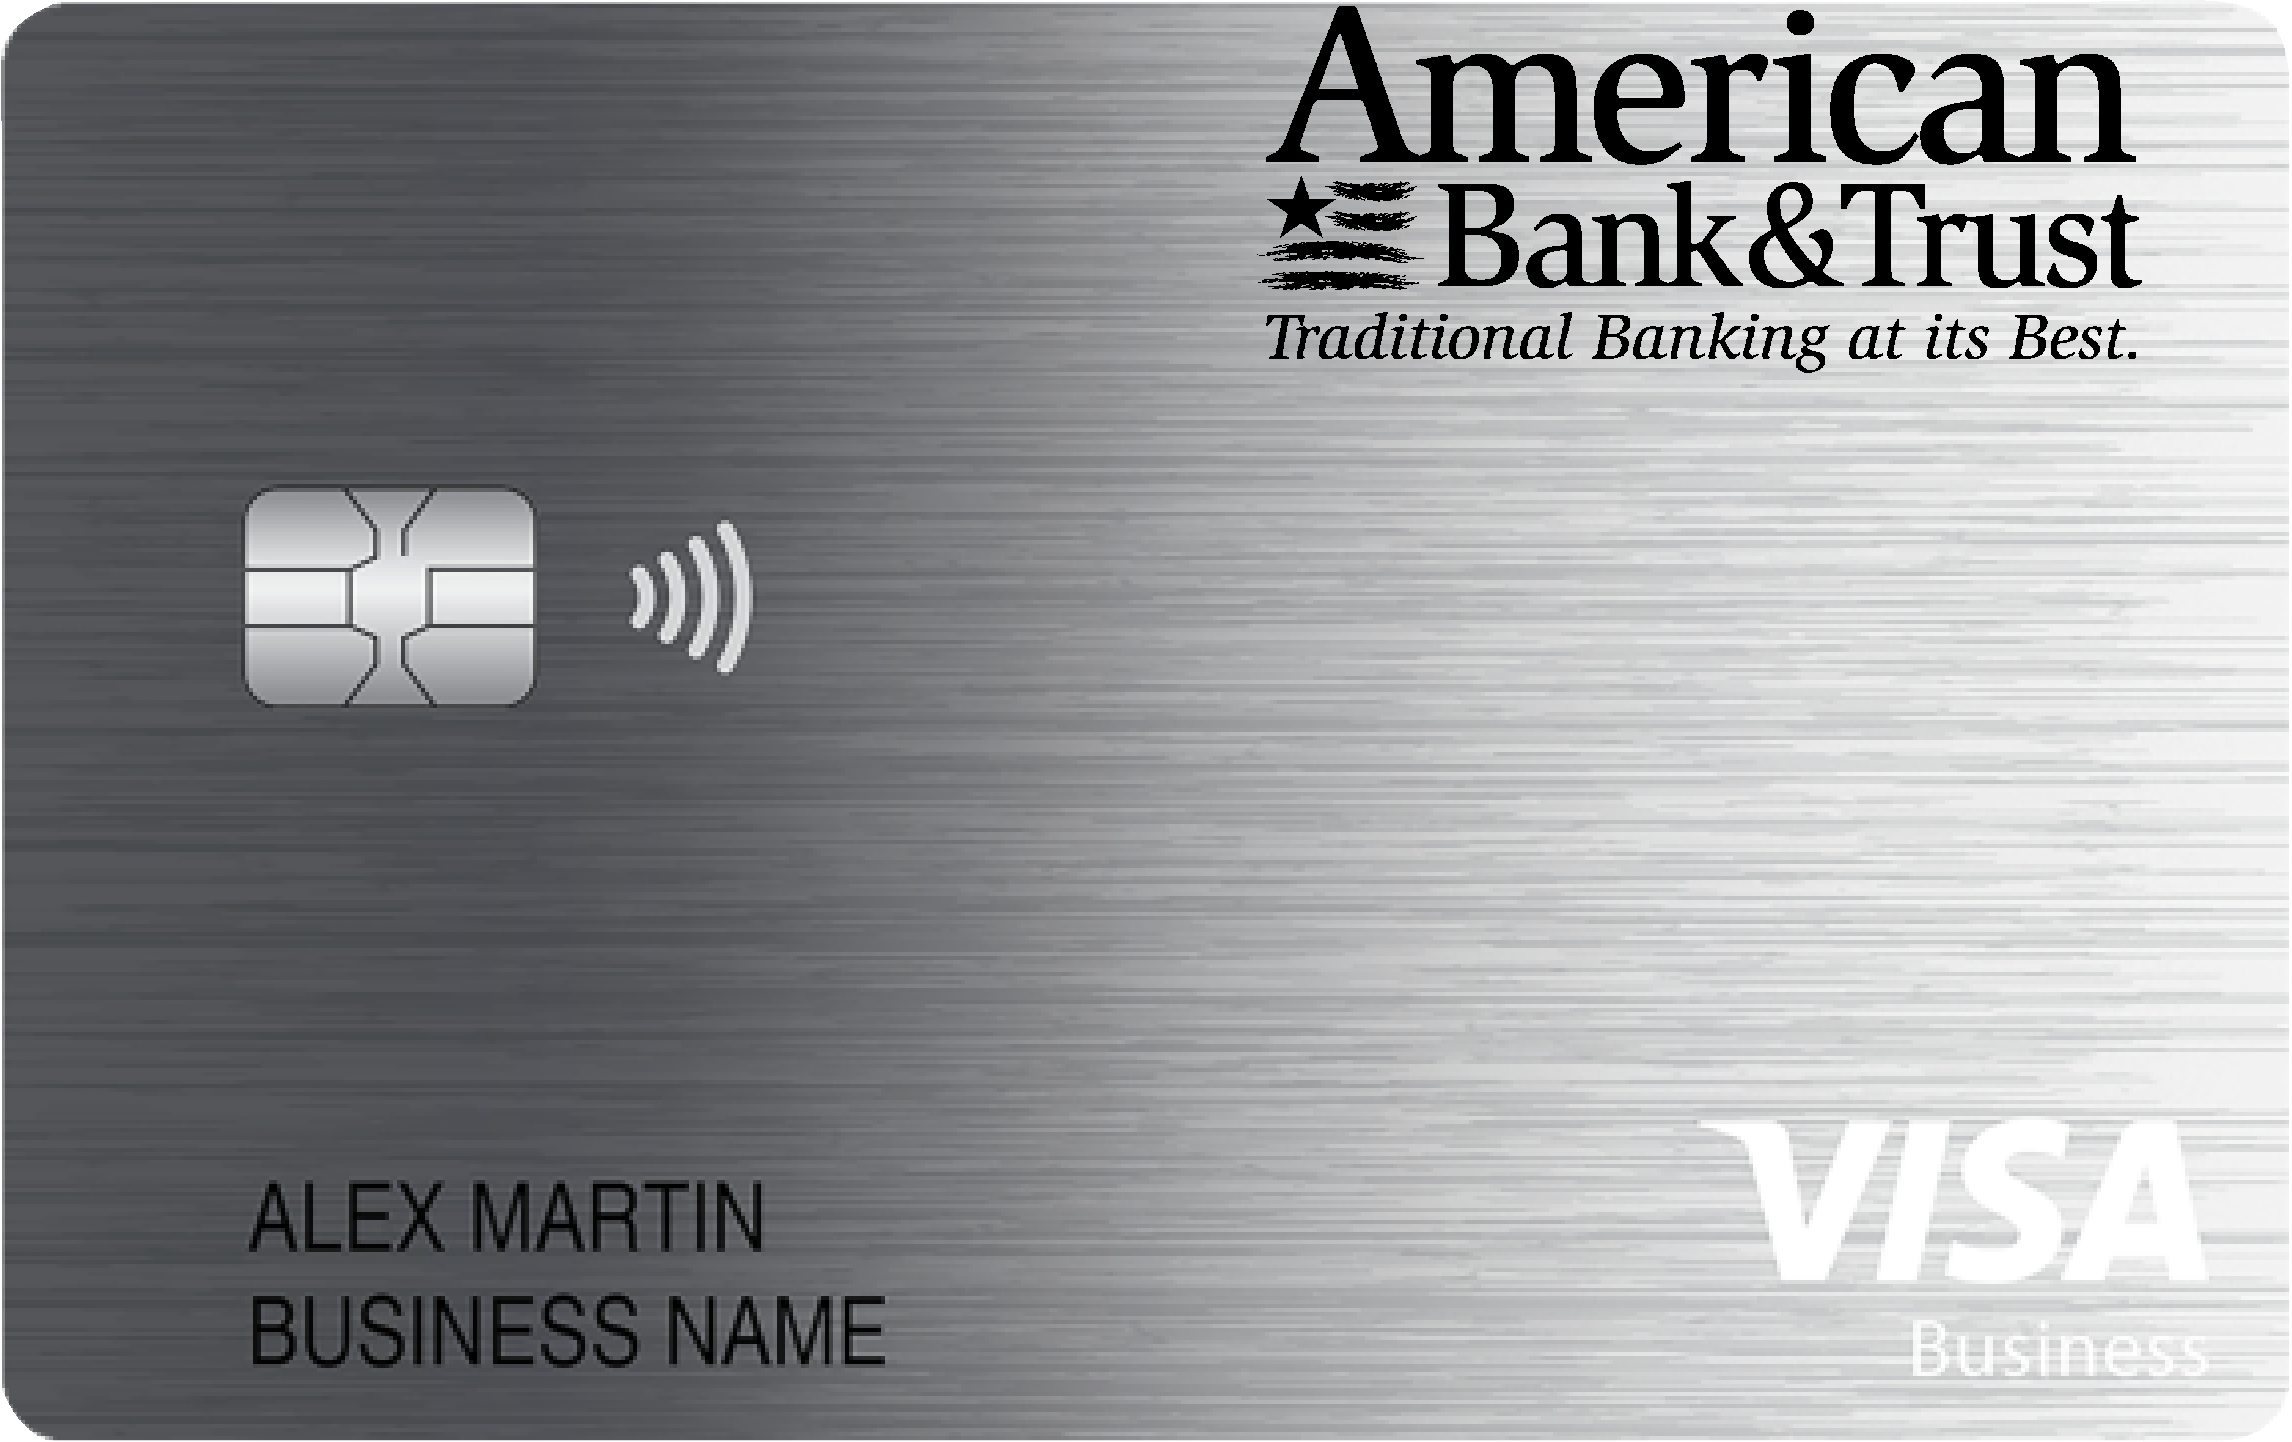 American Bank & Trust Business Cash Preferred Card